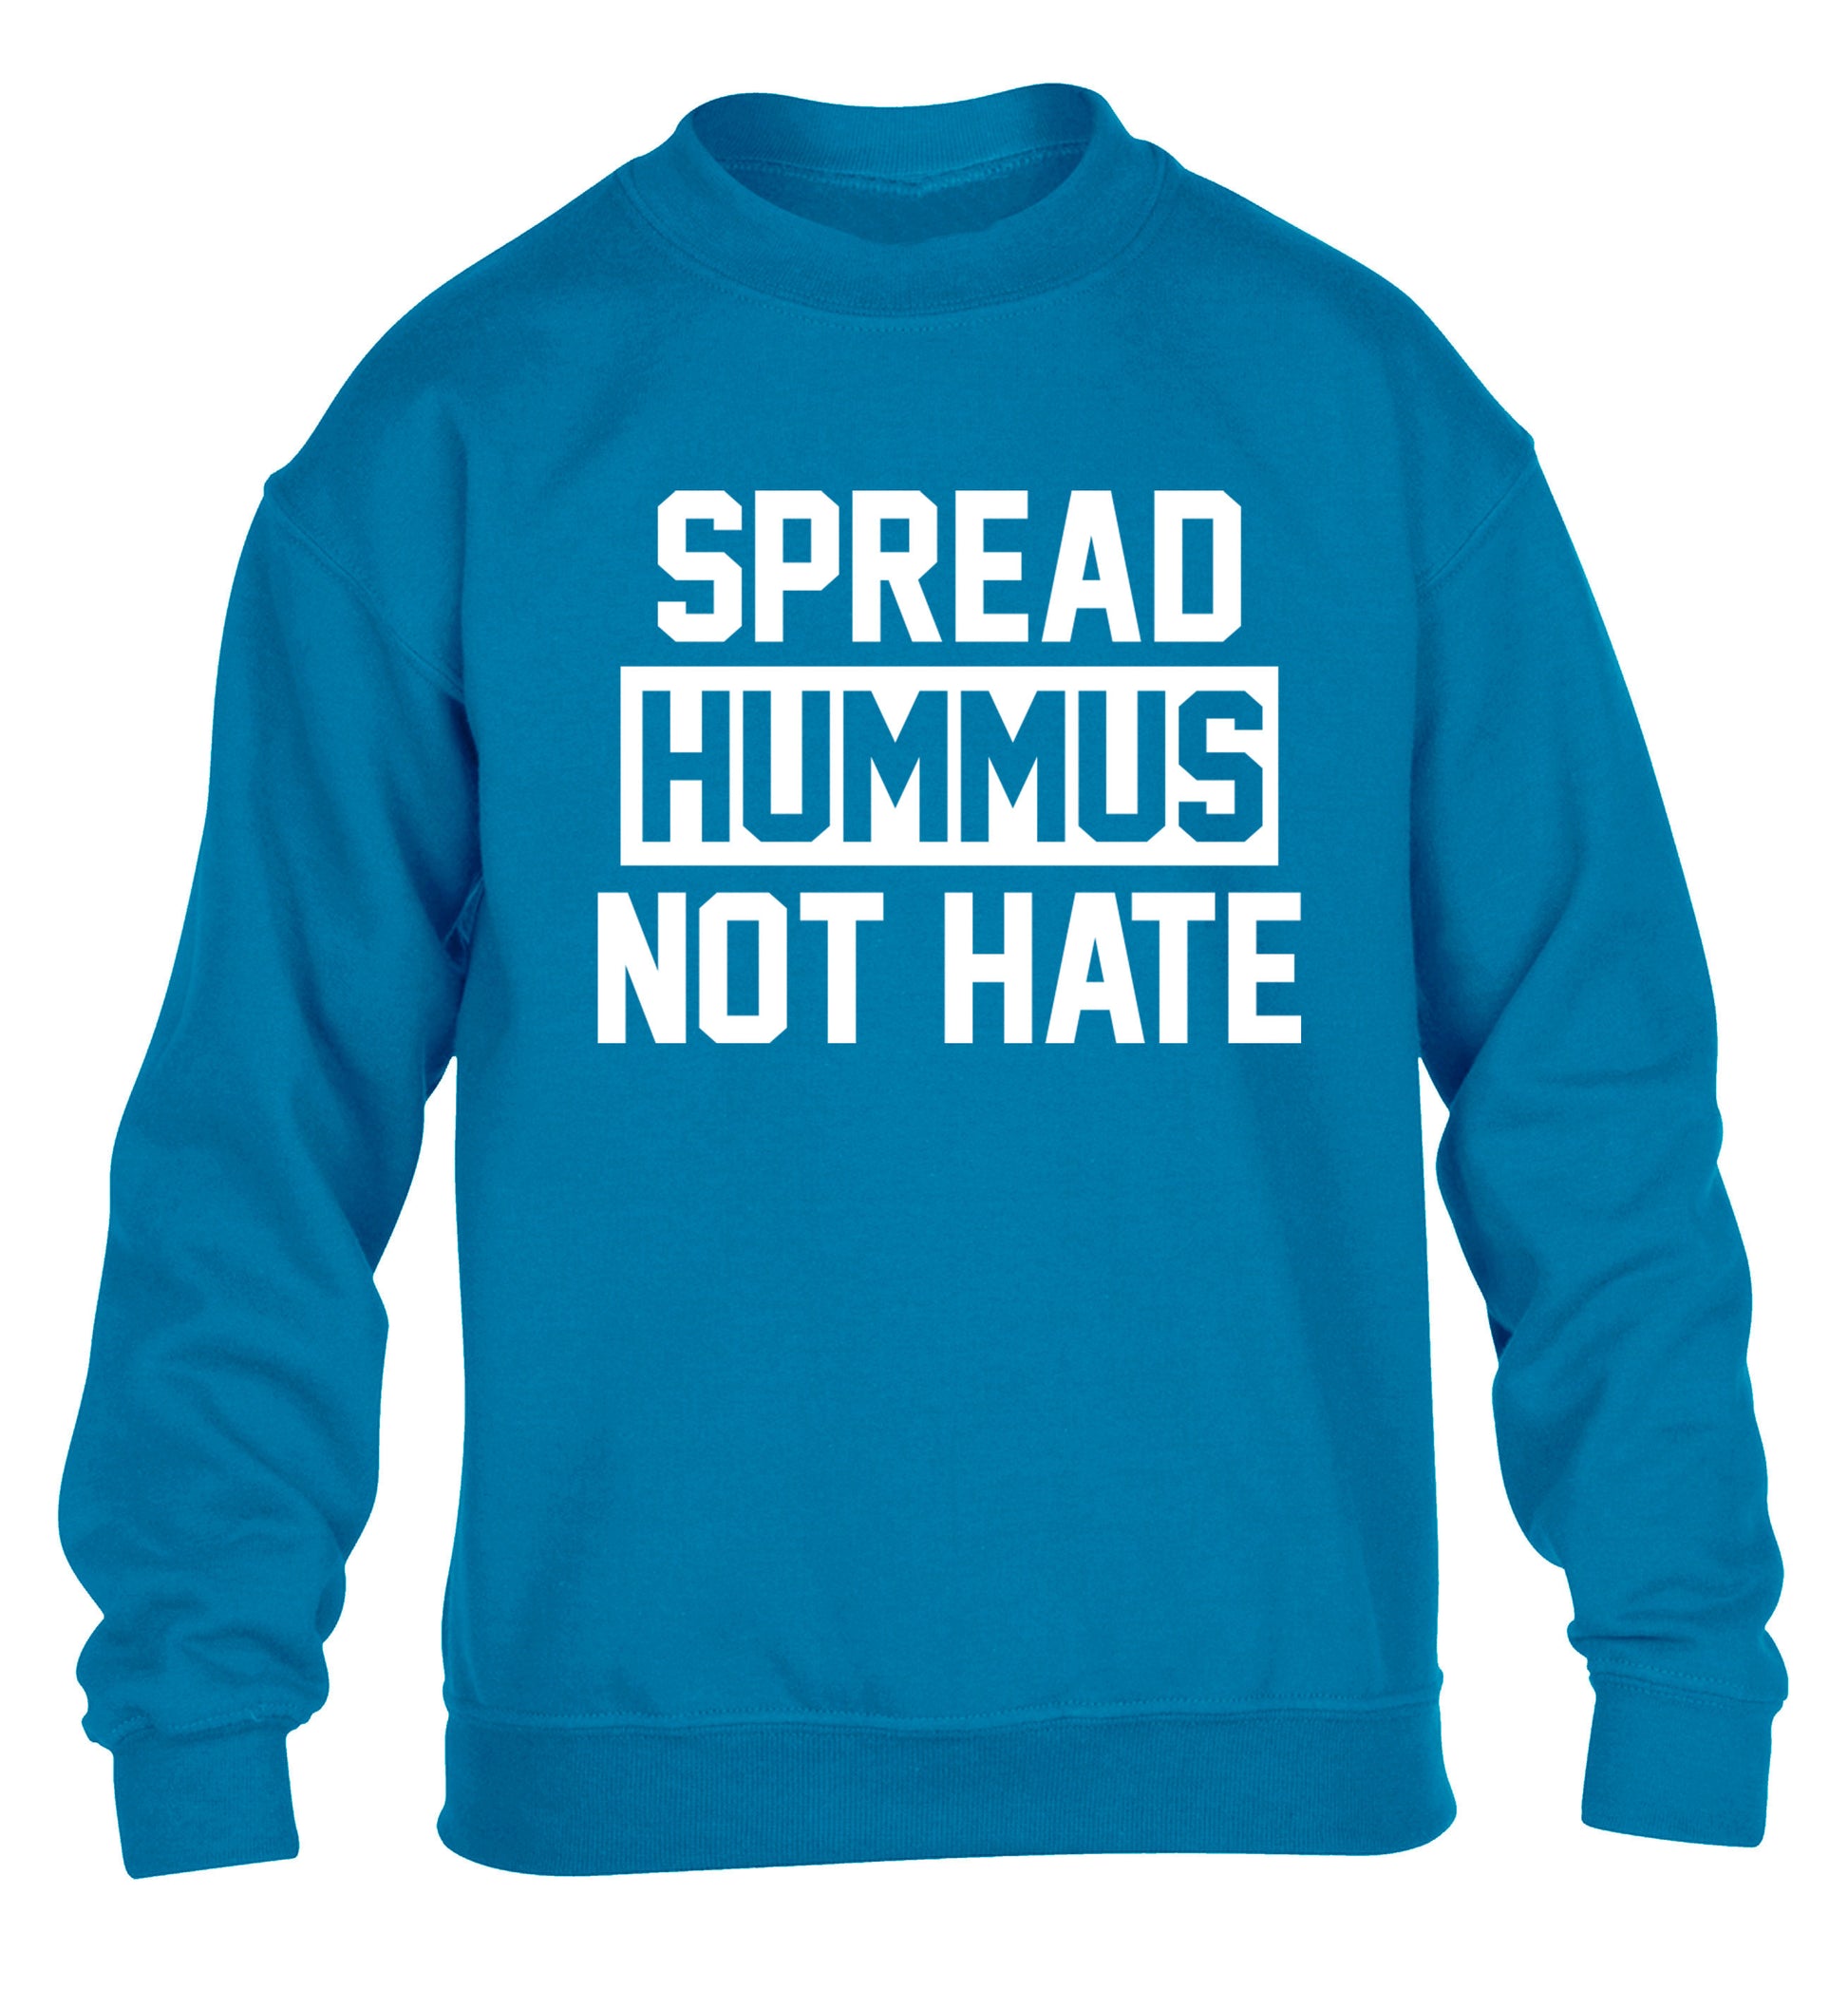 Spread hummus not hate children's blue sweater 12-14 Years